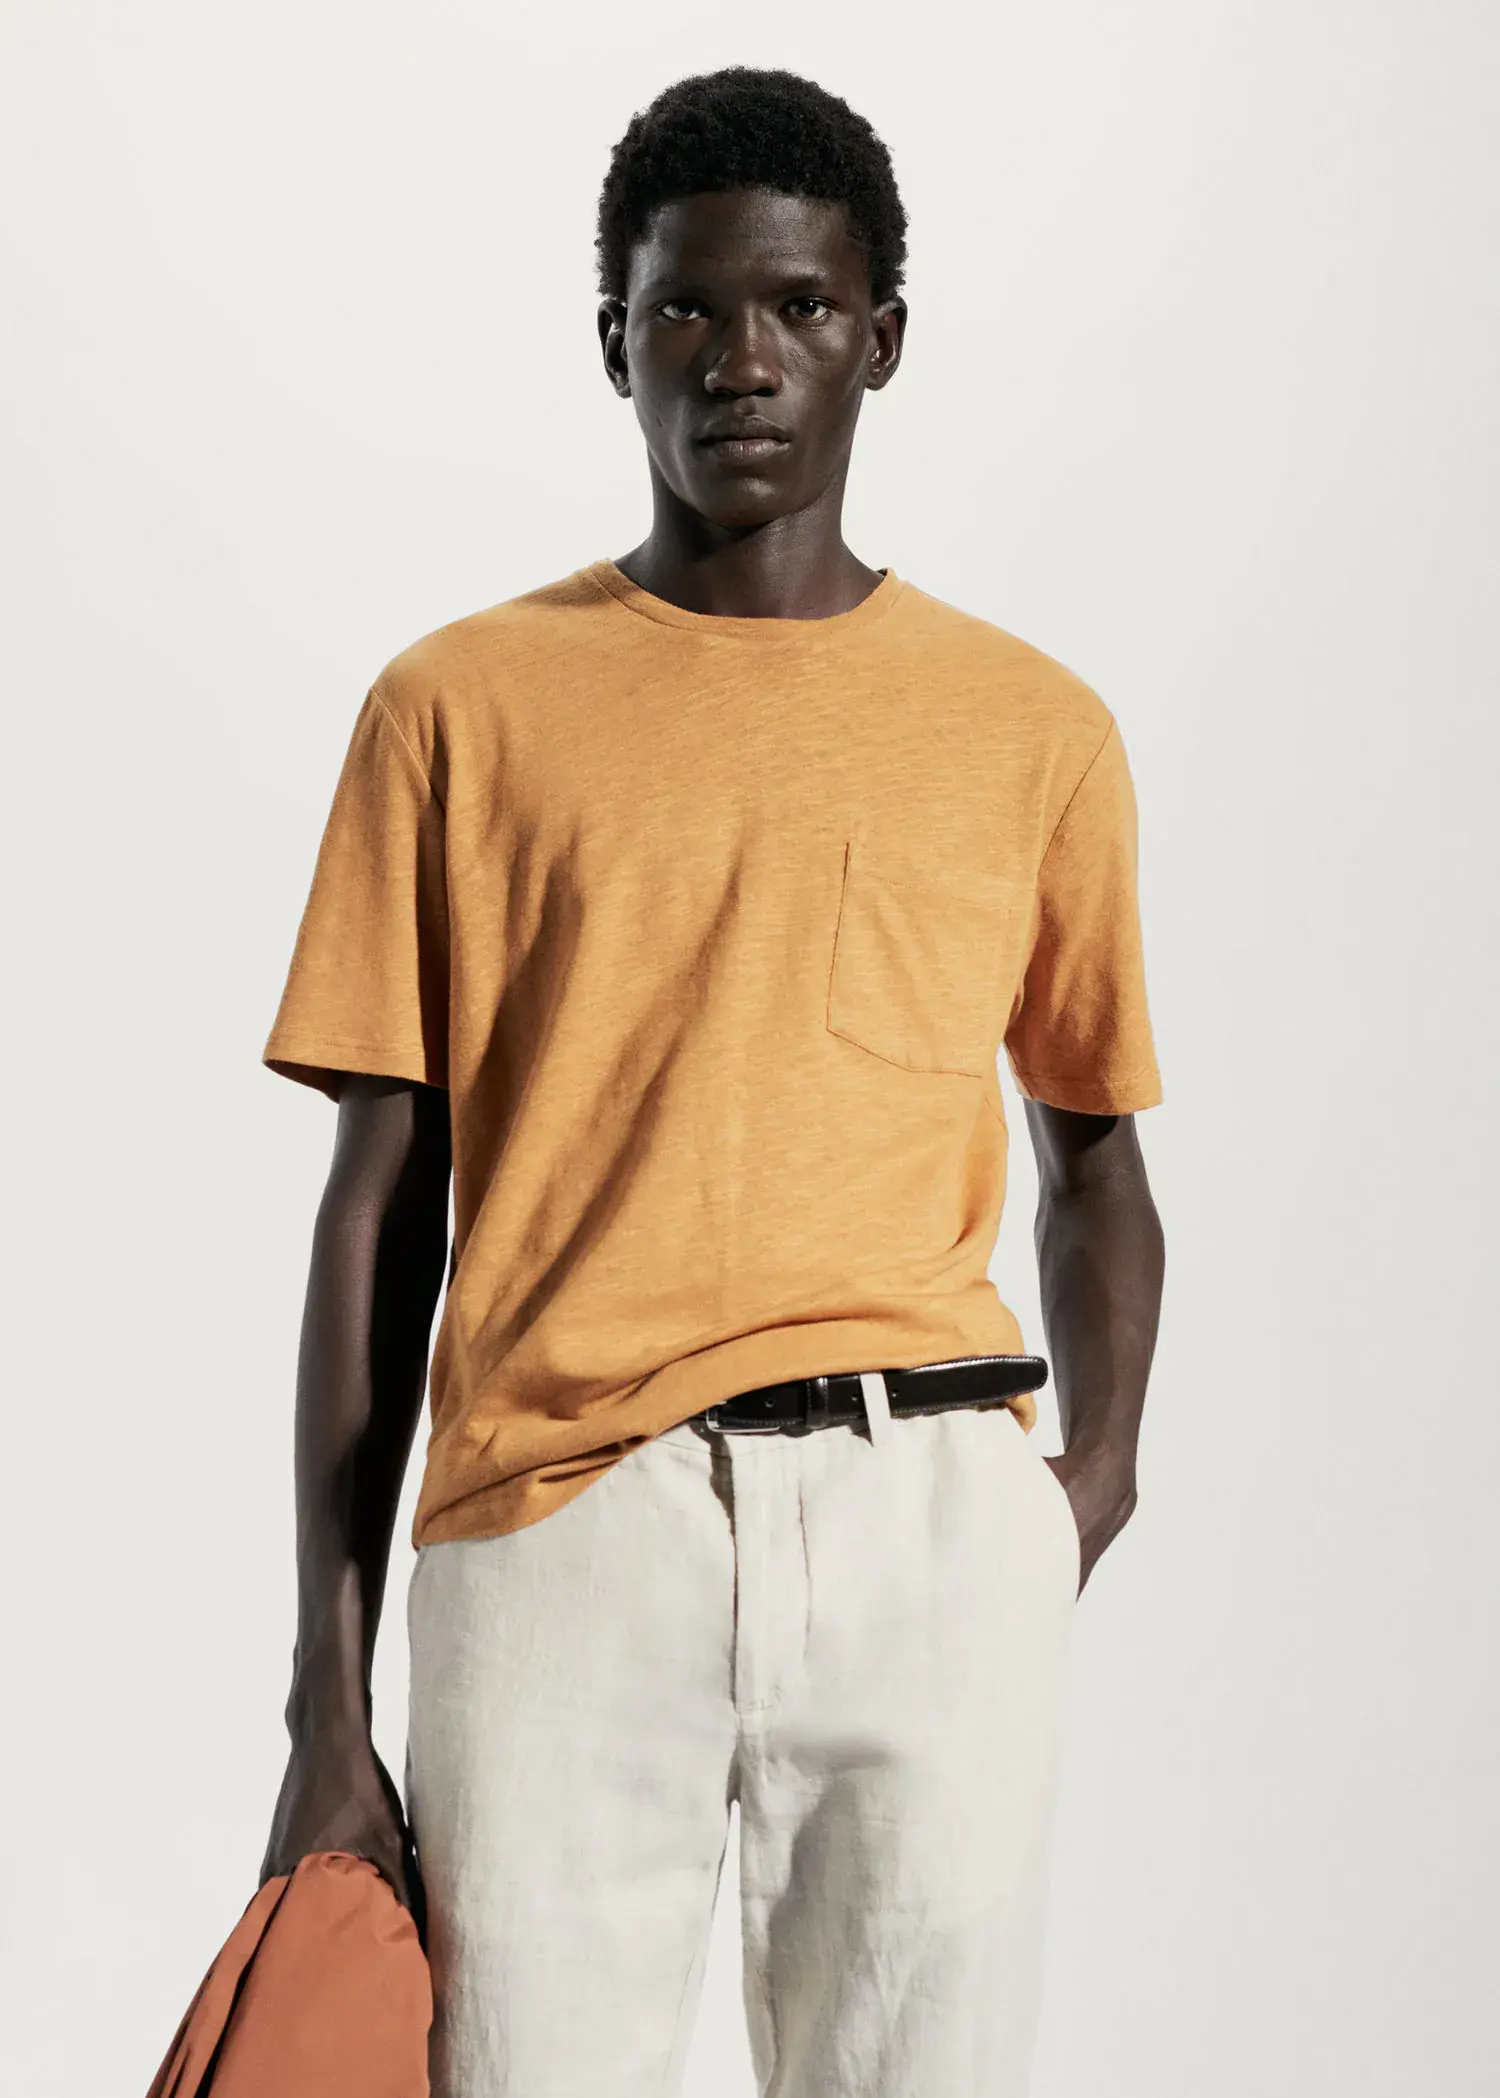 Mango Cotton-linen pocket t-shirt. a man in a yellow shirt and white shorts. 